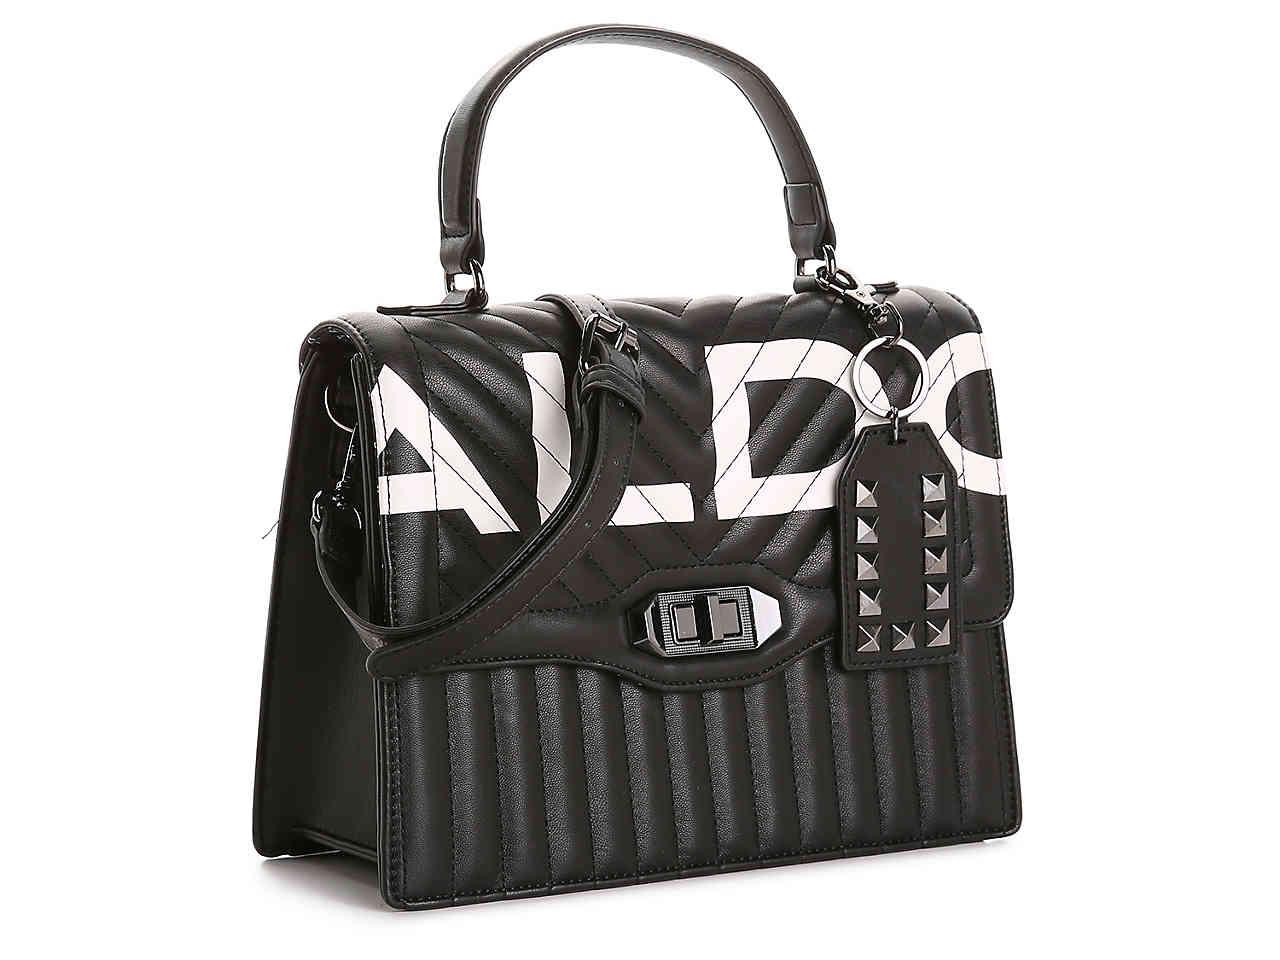 ALDO Qarenna Logo Crossbody Bag in Black/White (Black) - Lyst